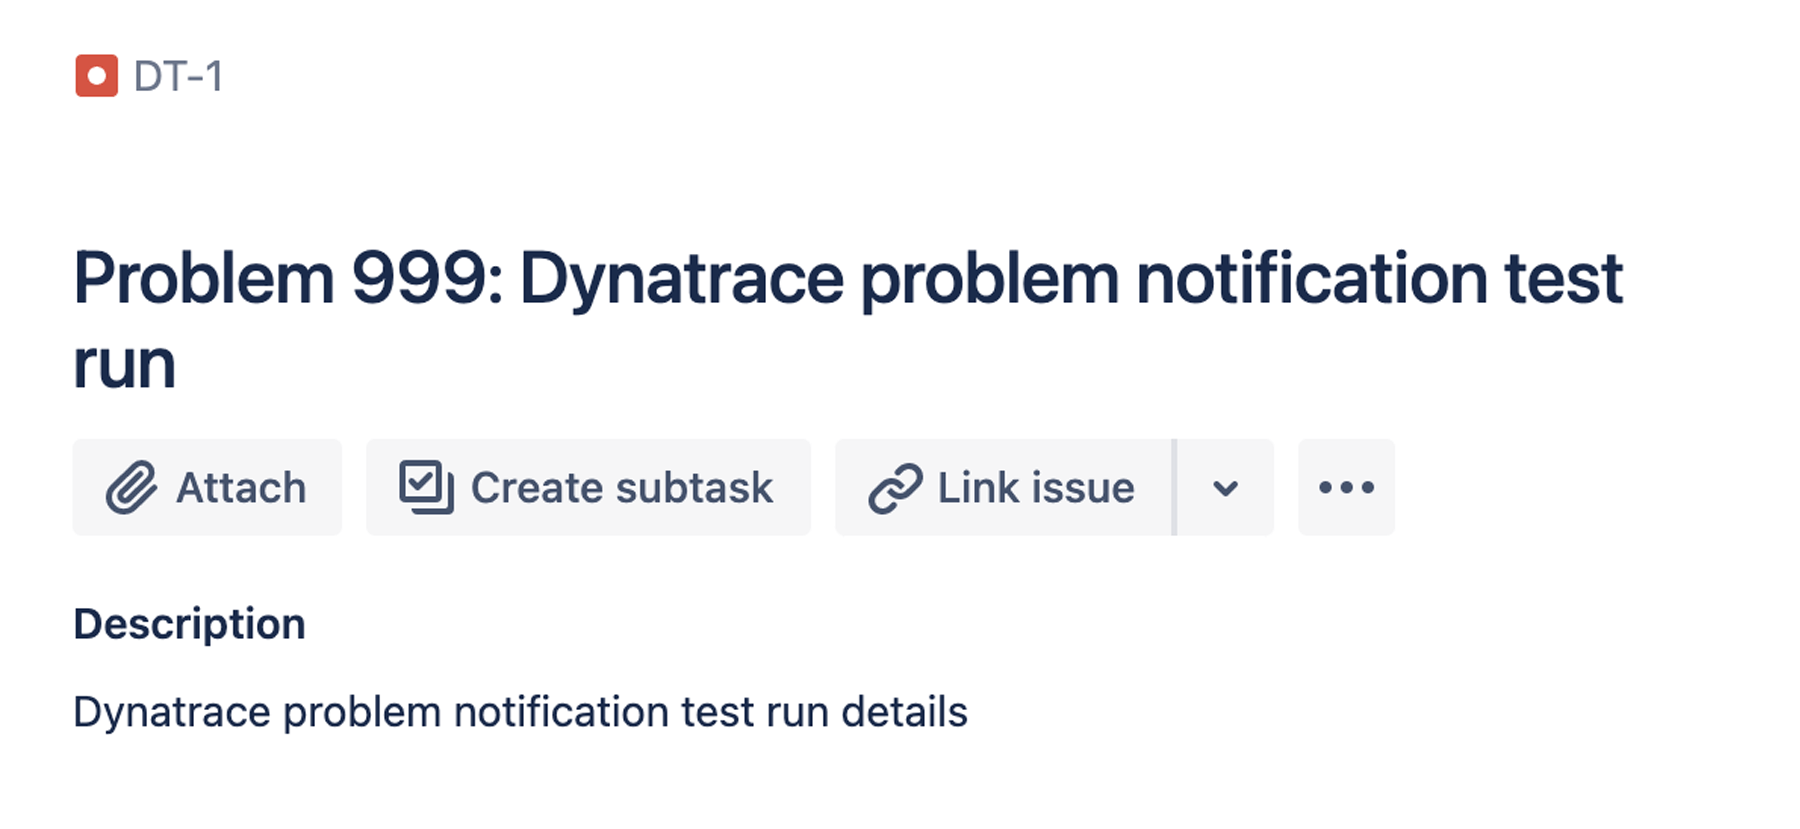 Dynatrace problem notification test run